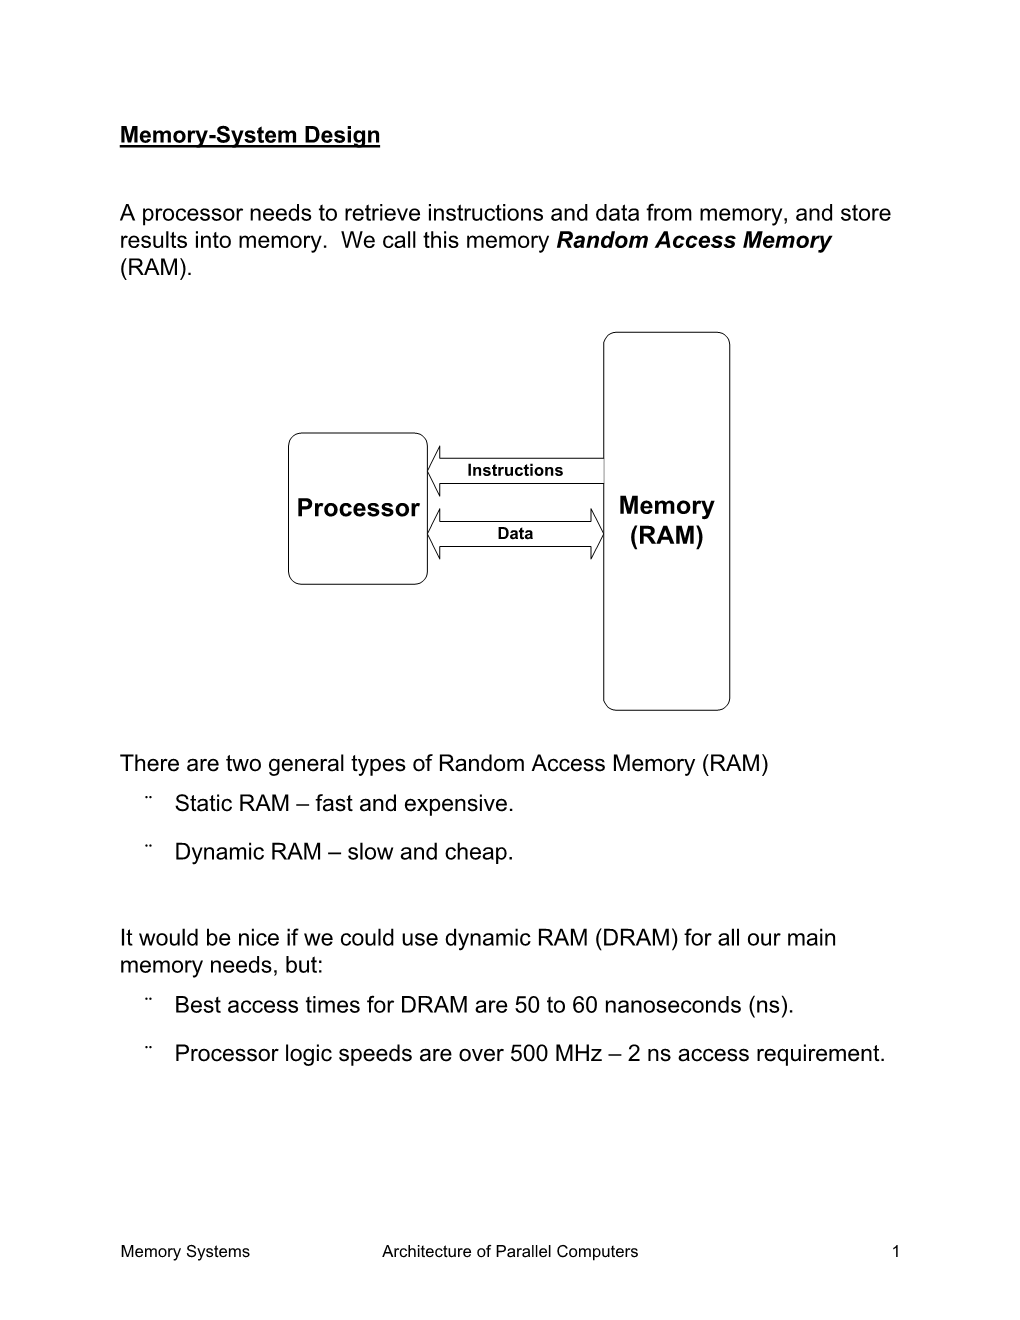 Processor Memory (RAM)